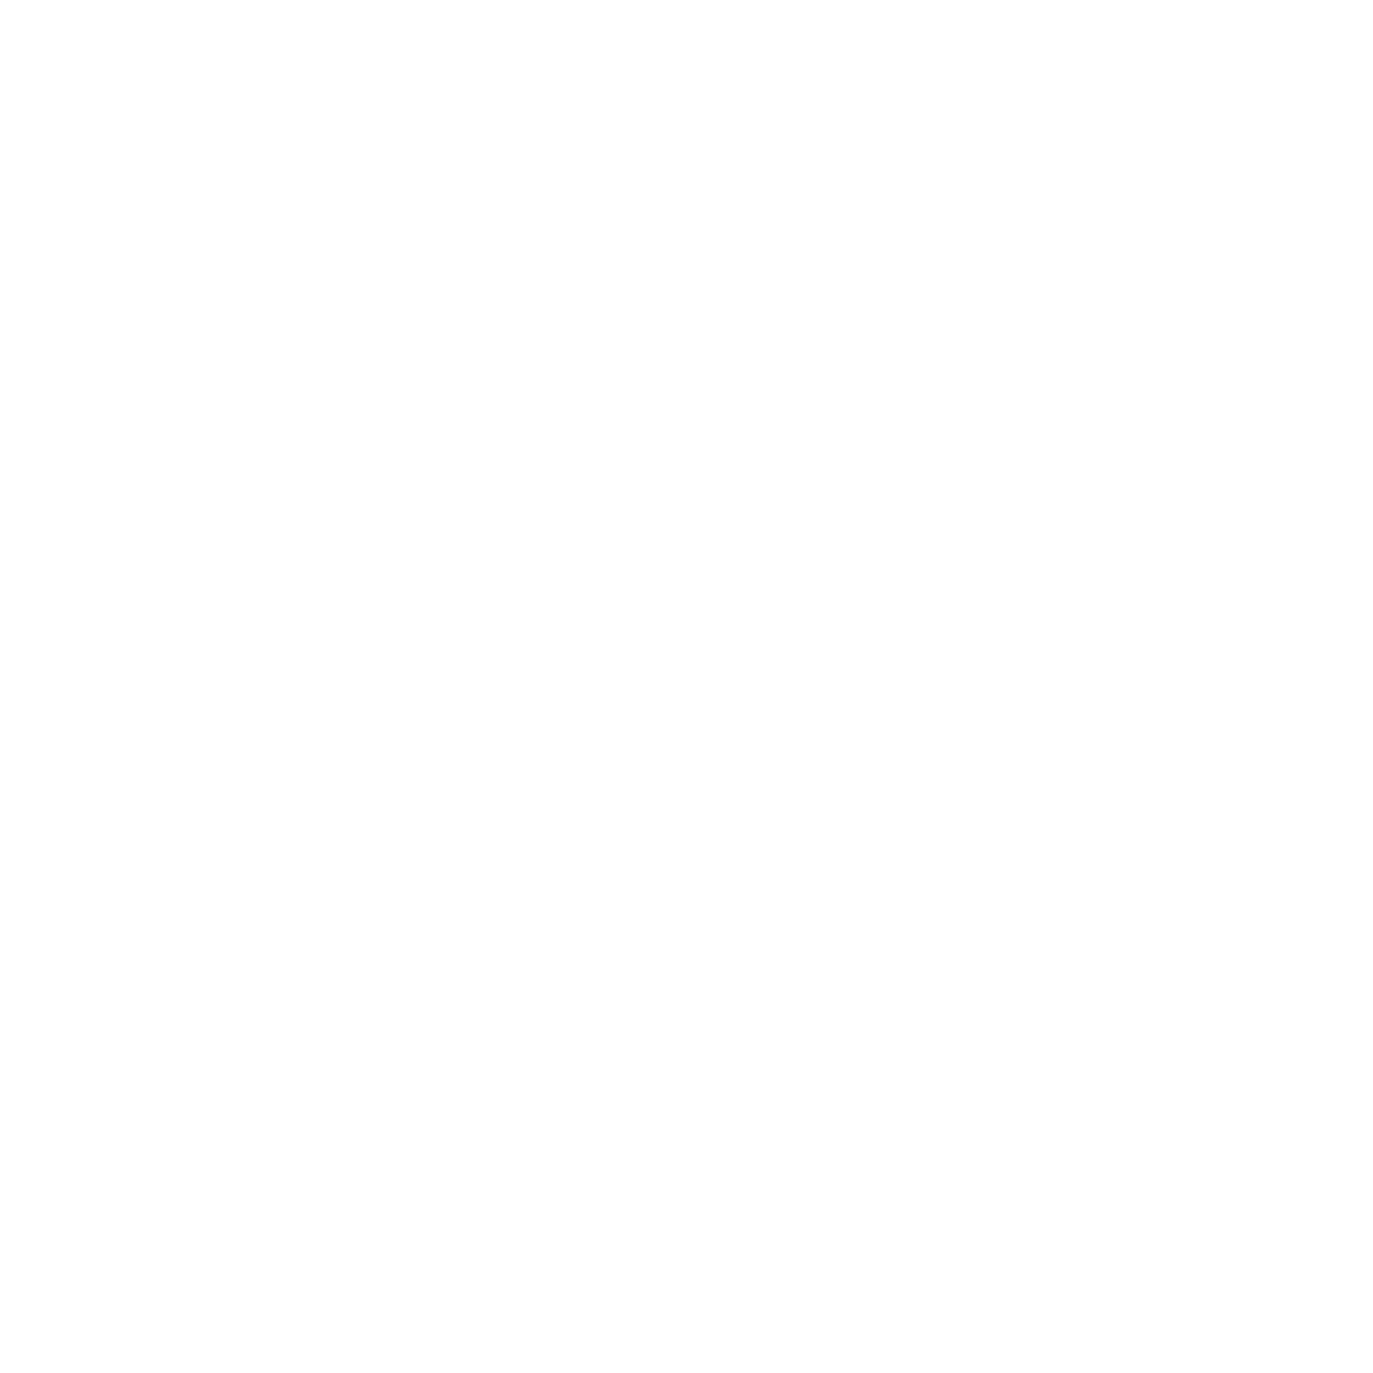 wow99 - HacksawGaming